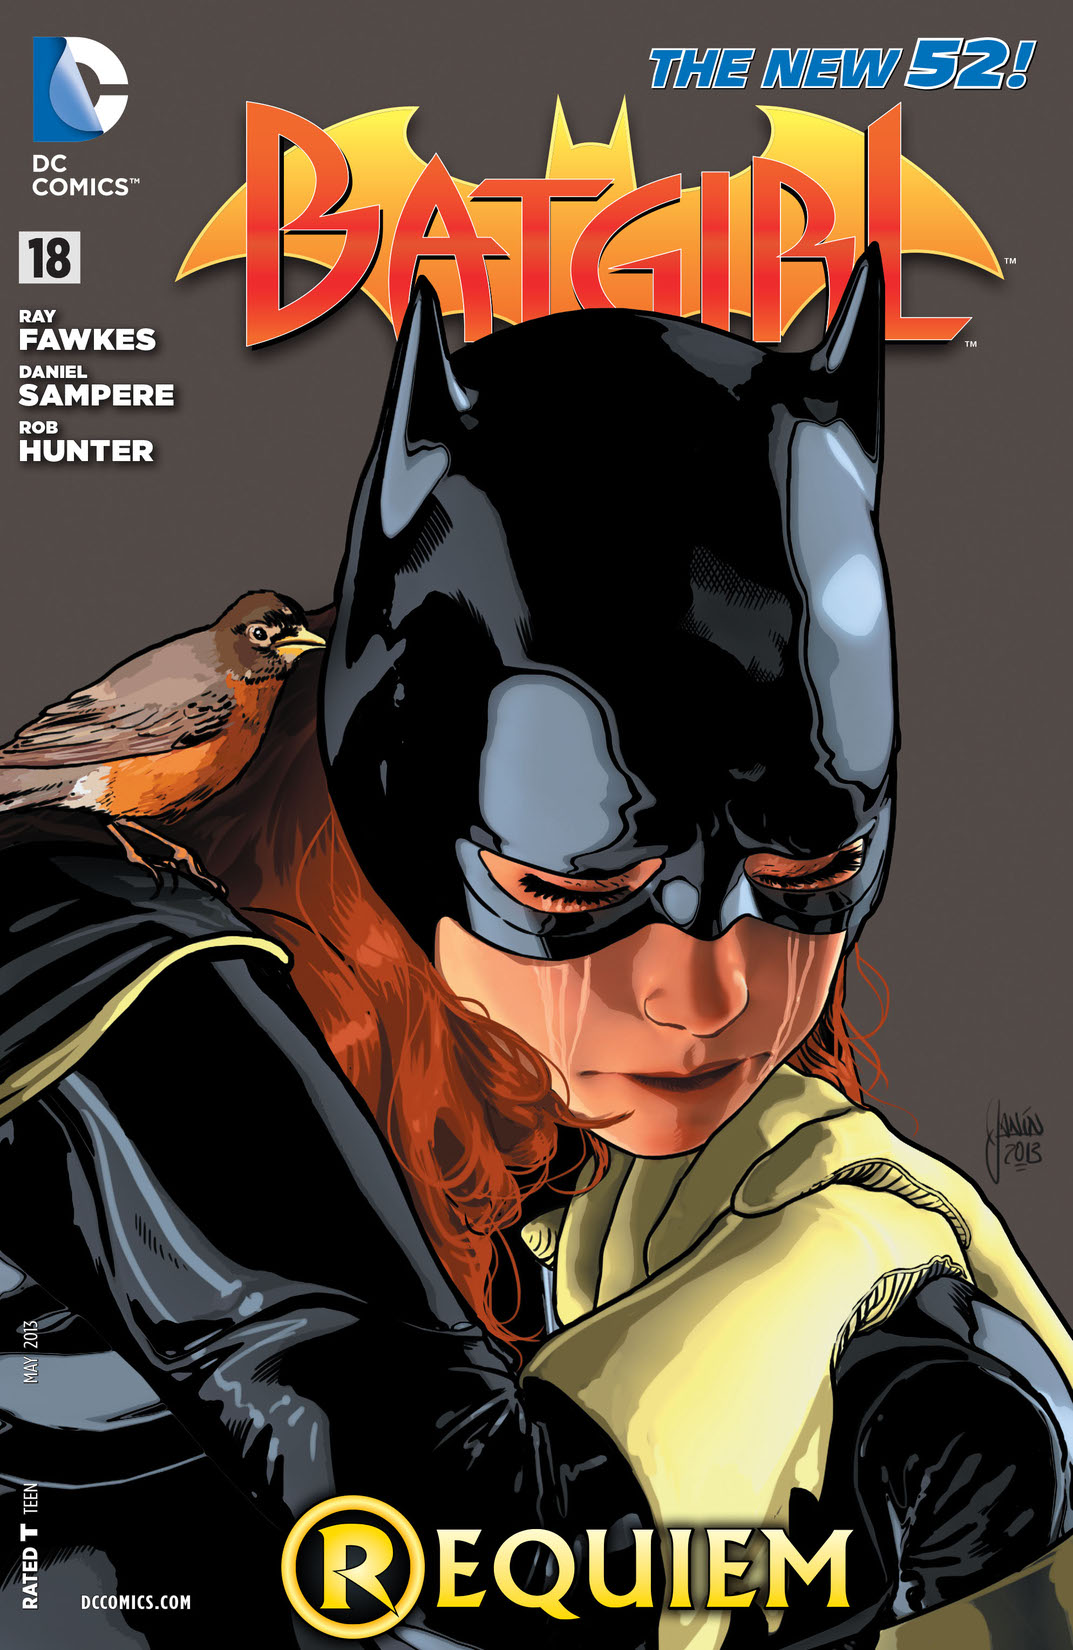 Batgirl (2011-) #18 preview images